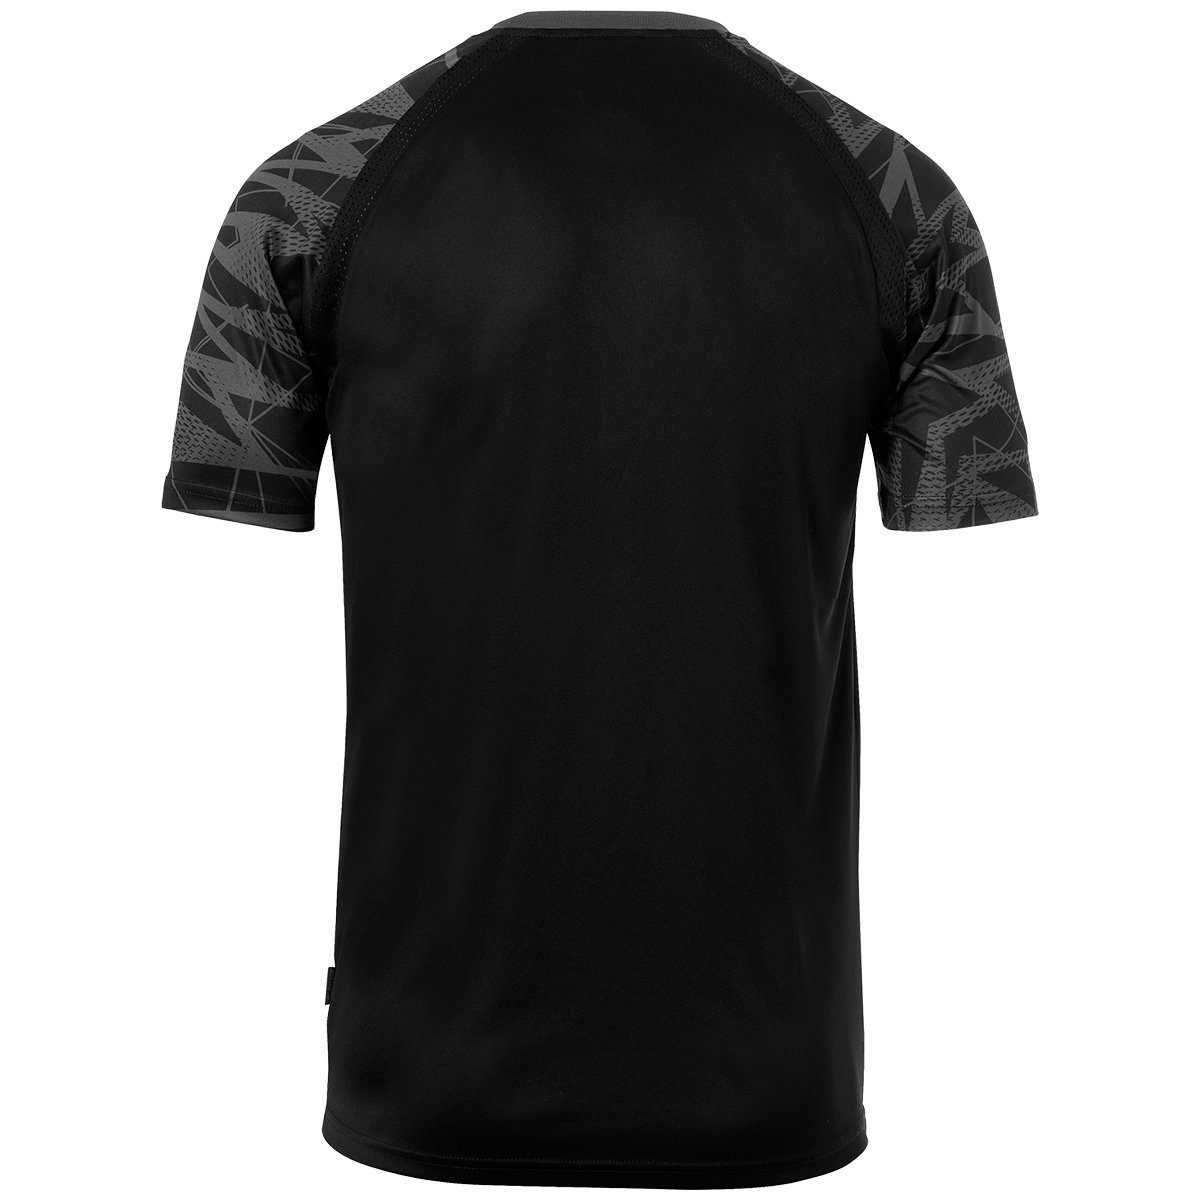 uhlsport KURZARM uhlsport 25 GOAL Trainings-T-Shirt schwarz/anthra Trainingsshirt atmungsaktiv TRIKOT